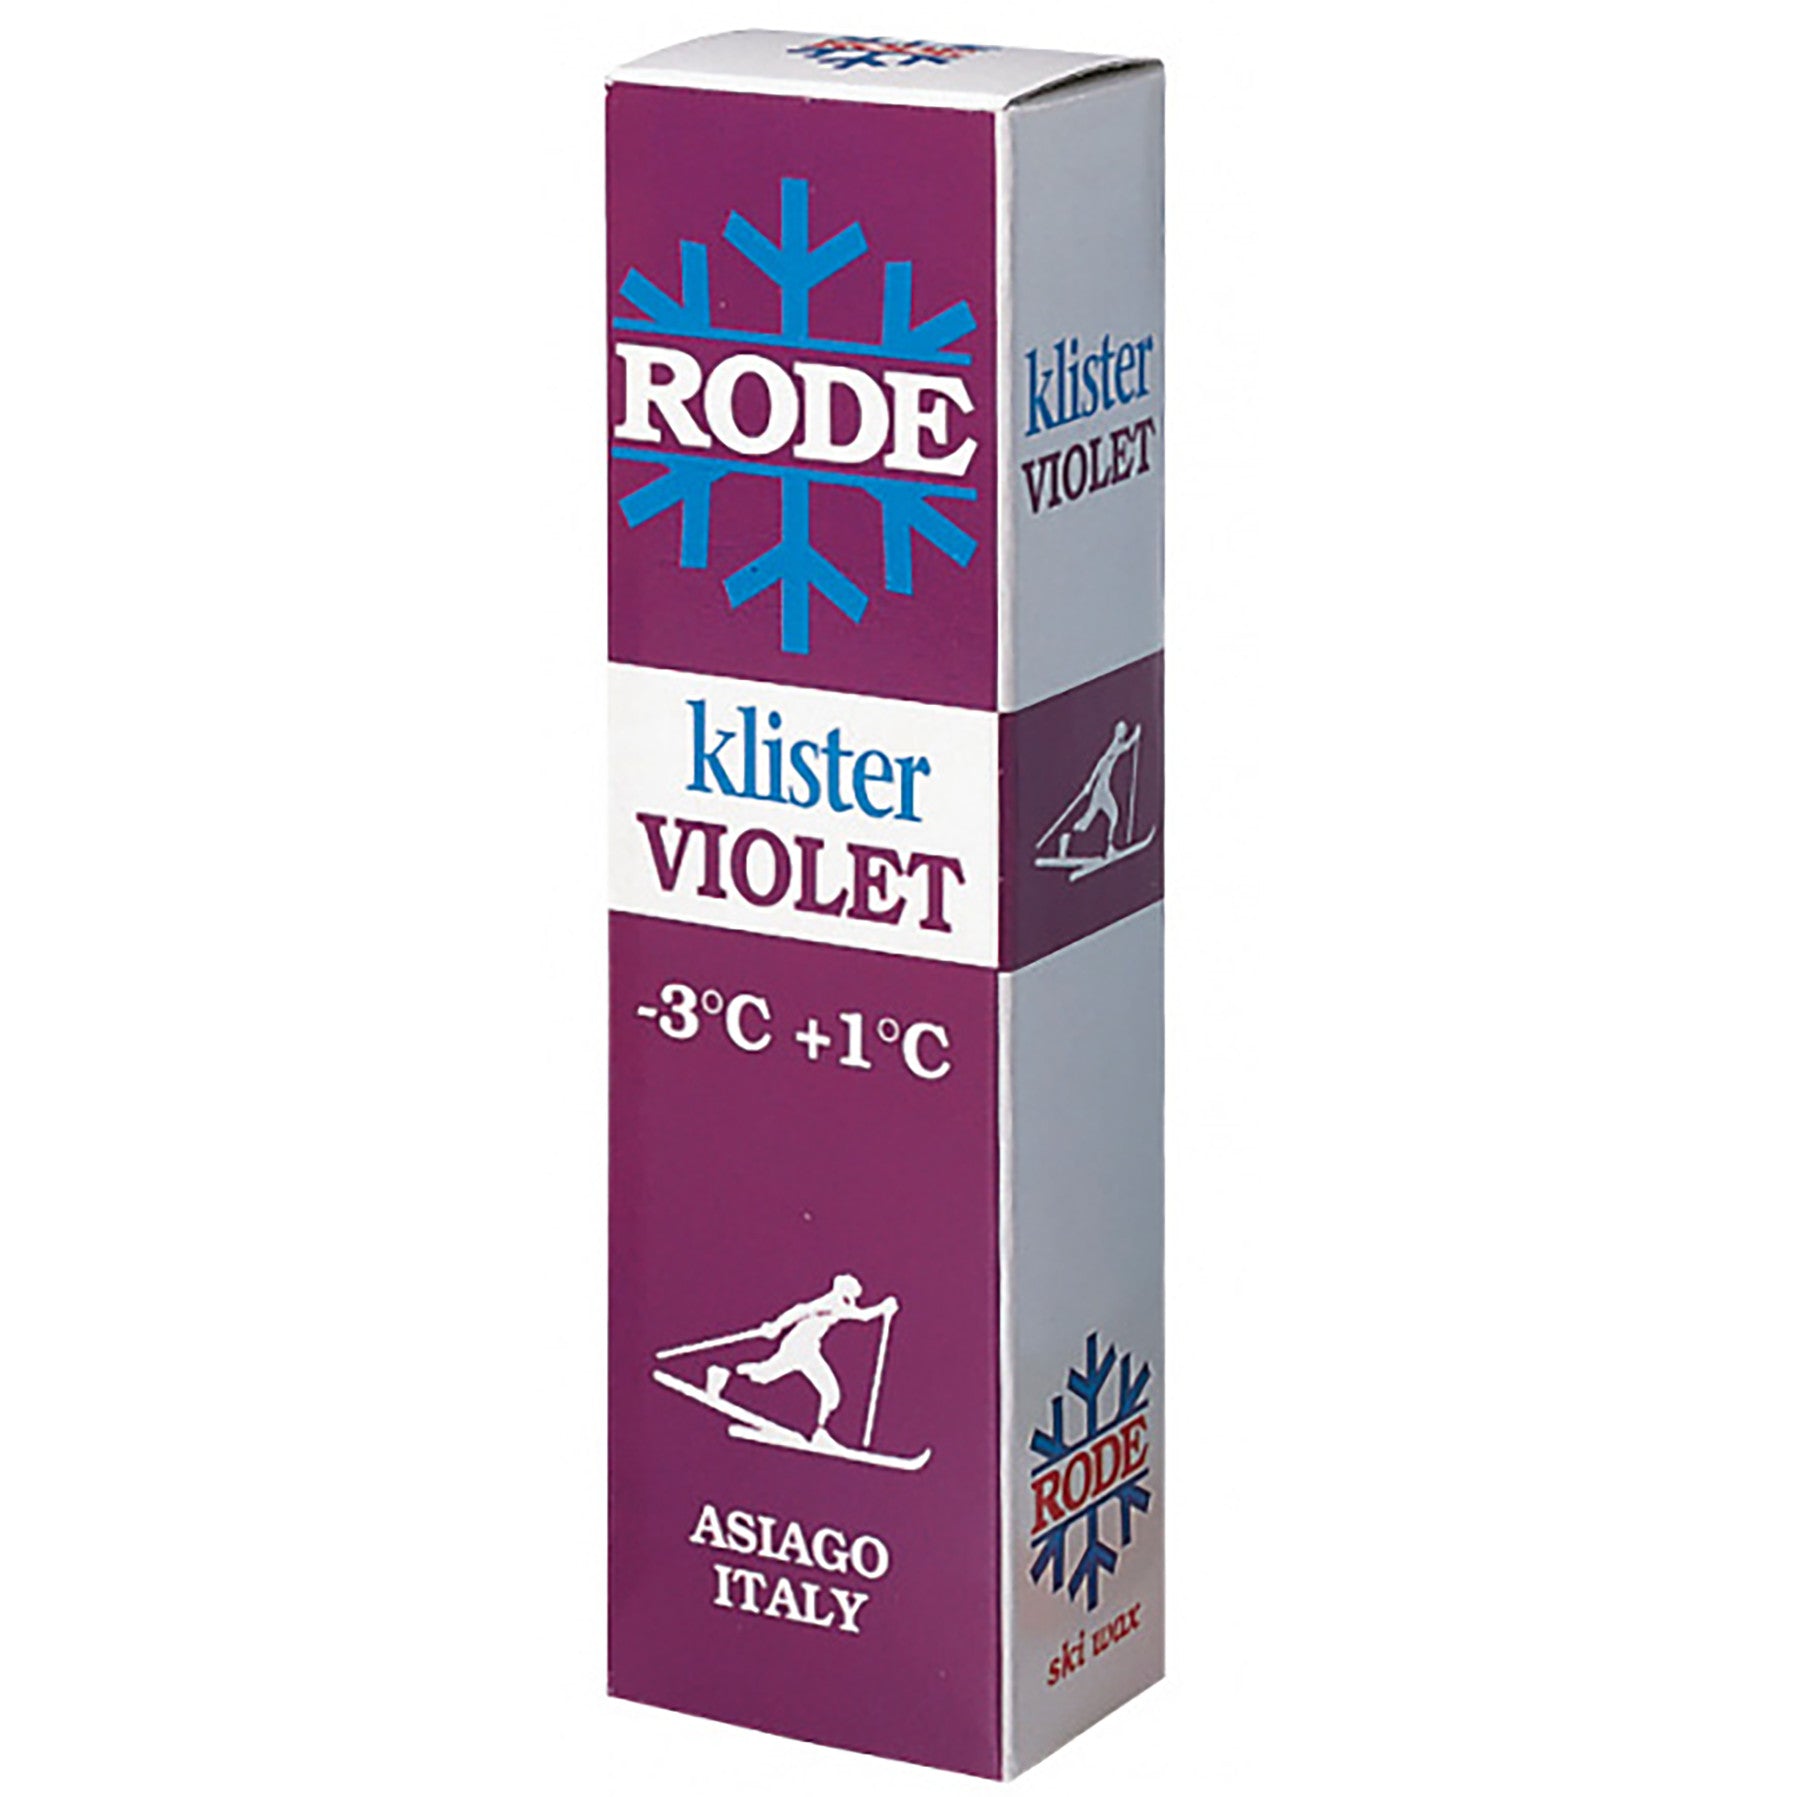 Buy violet-k30 Rode Klister 60g tube